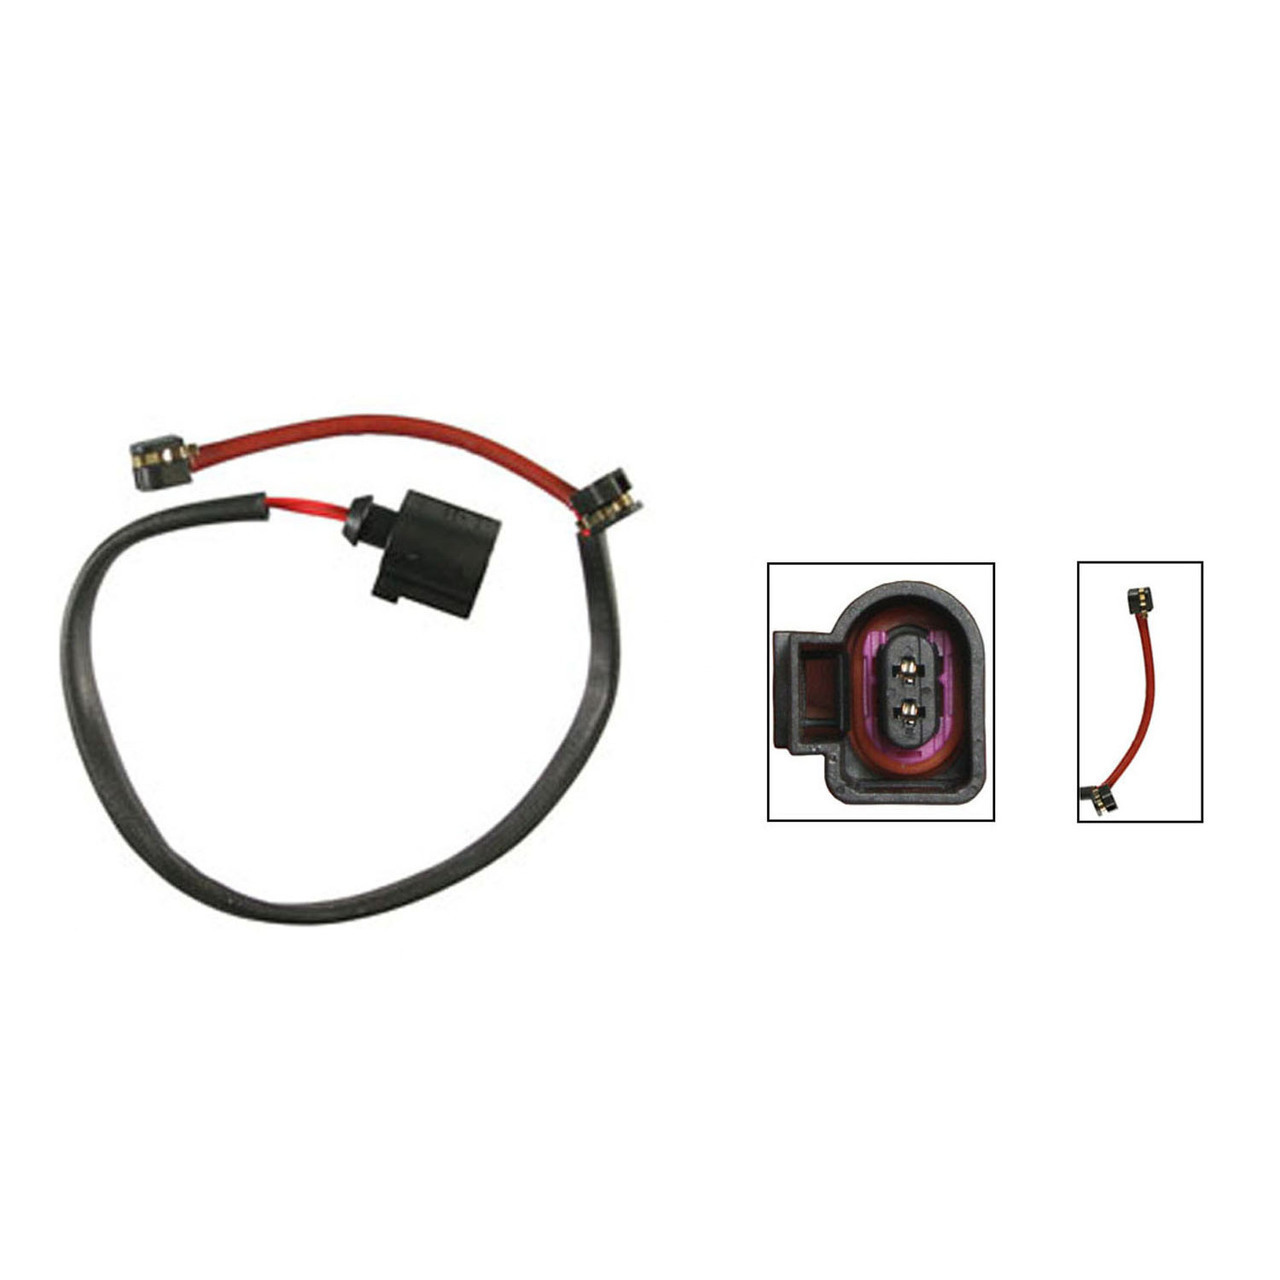 Disc Brake Pad Wear Sensor-Brake Pad Sensor Wires Rear,Front Centric 116.33004